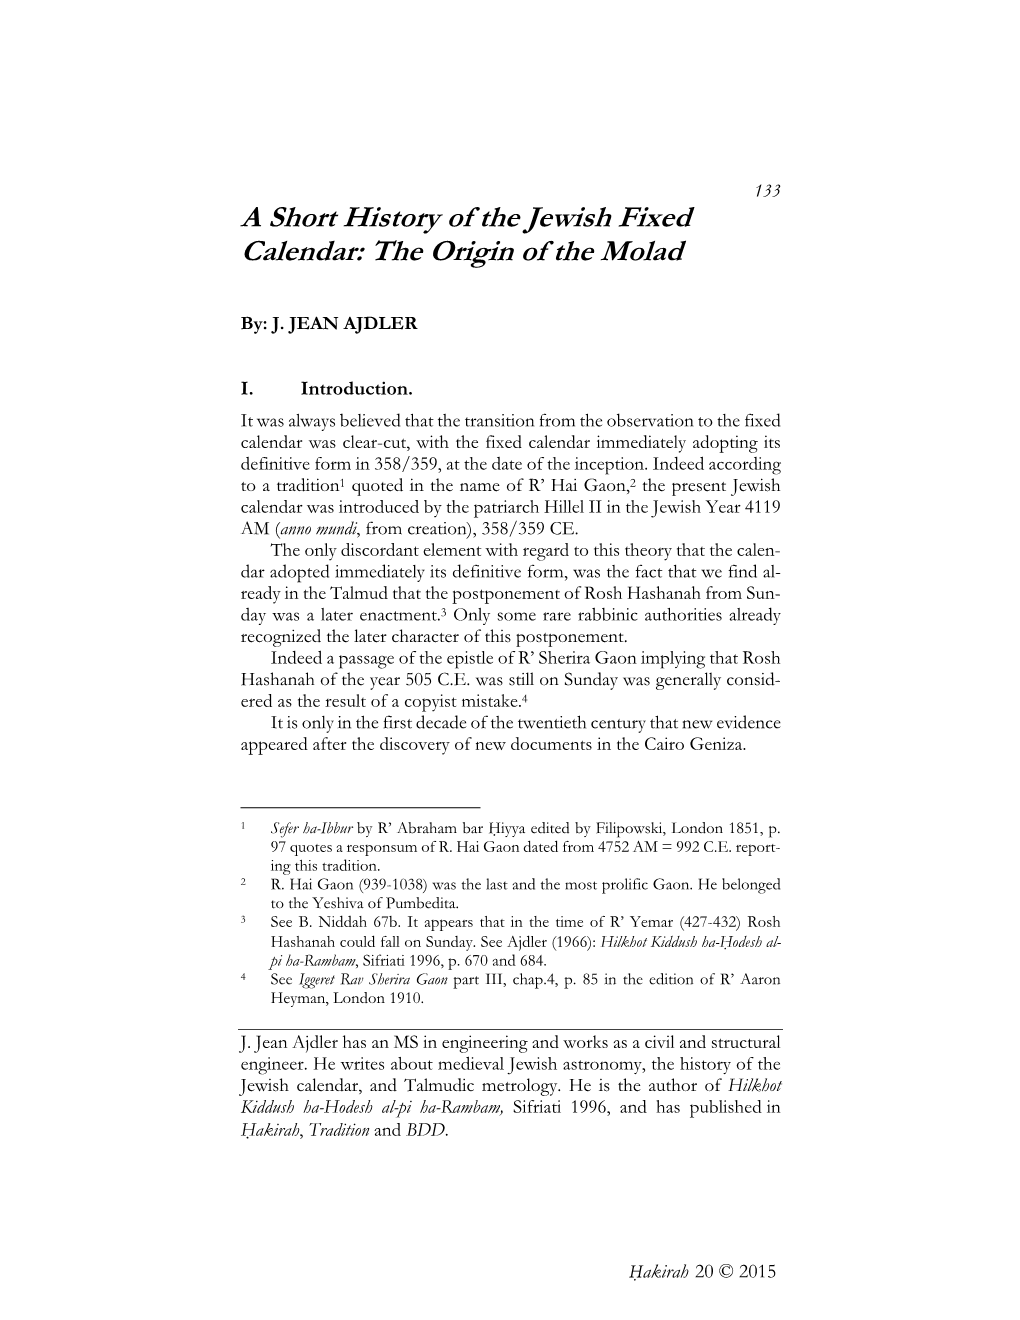 A Short History of the Jewish Fixed Calendar: the Origin of the Molad